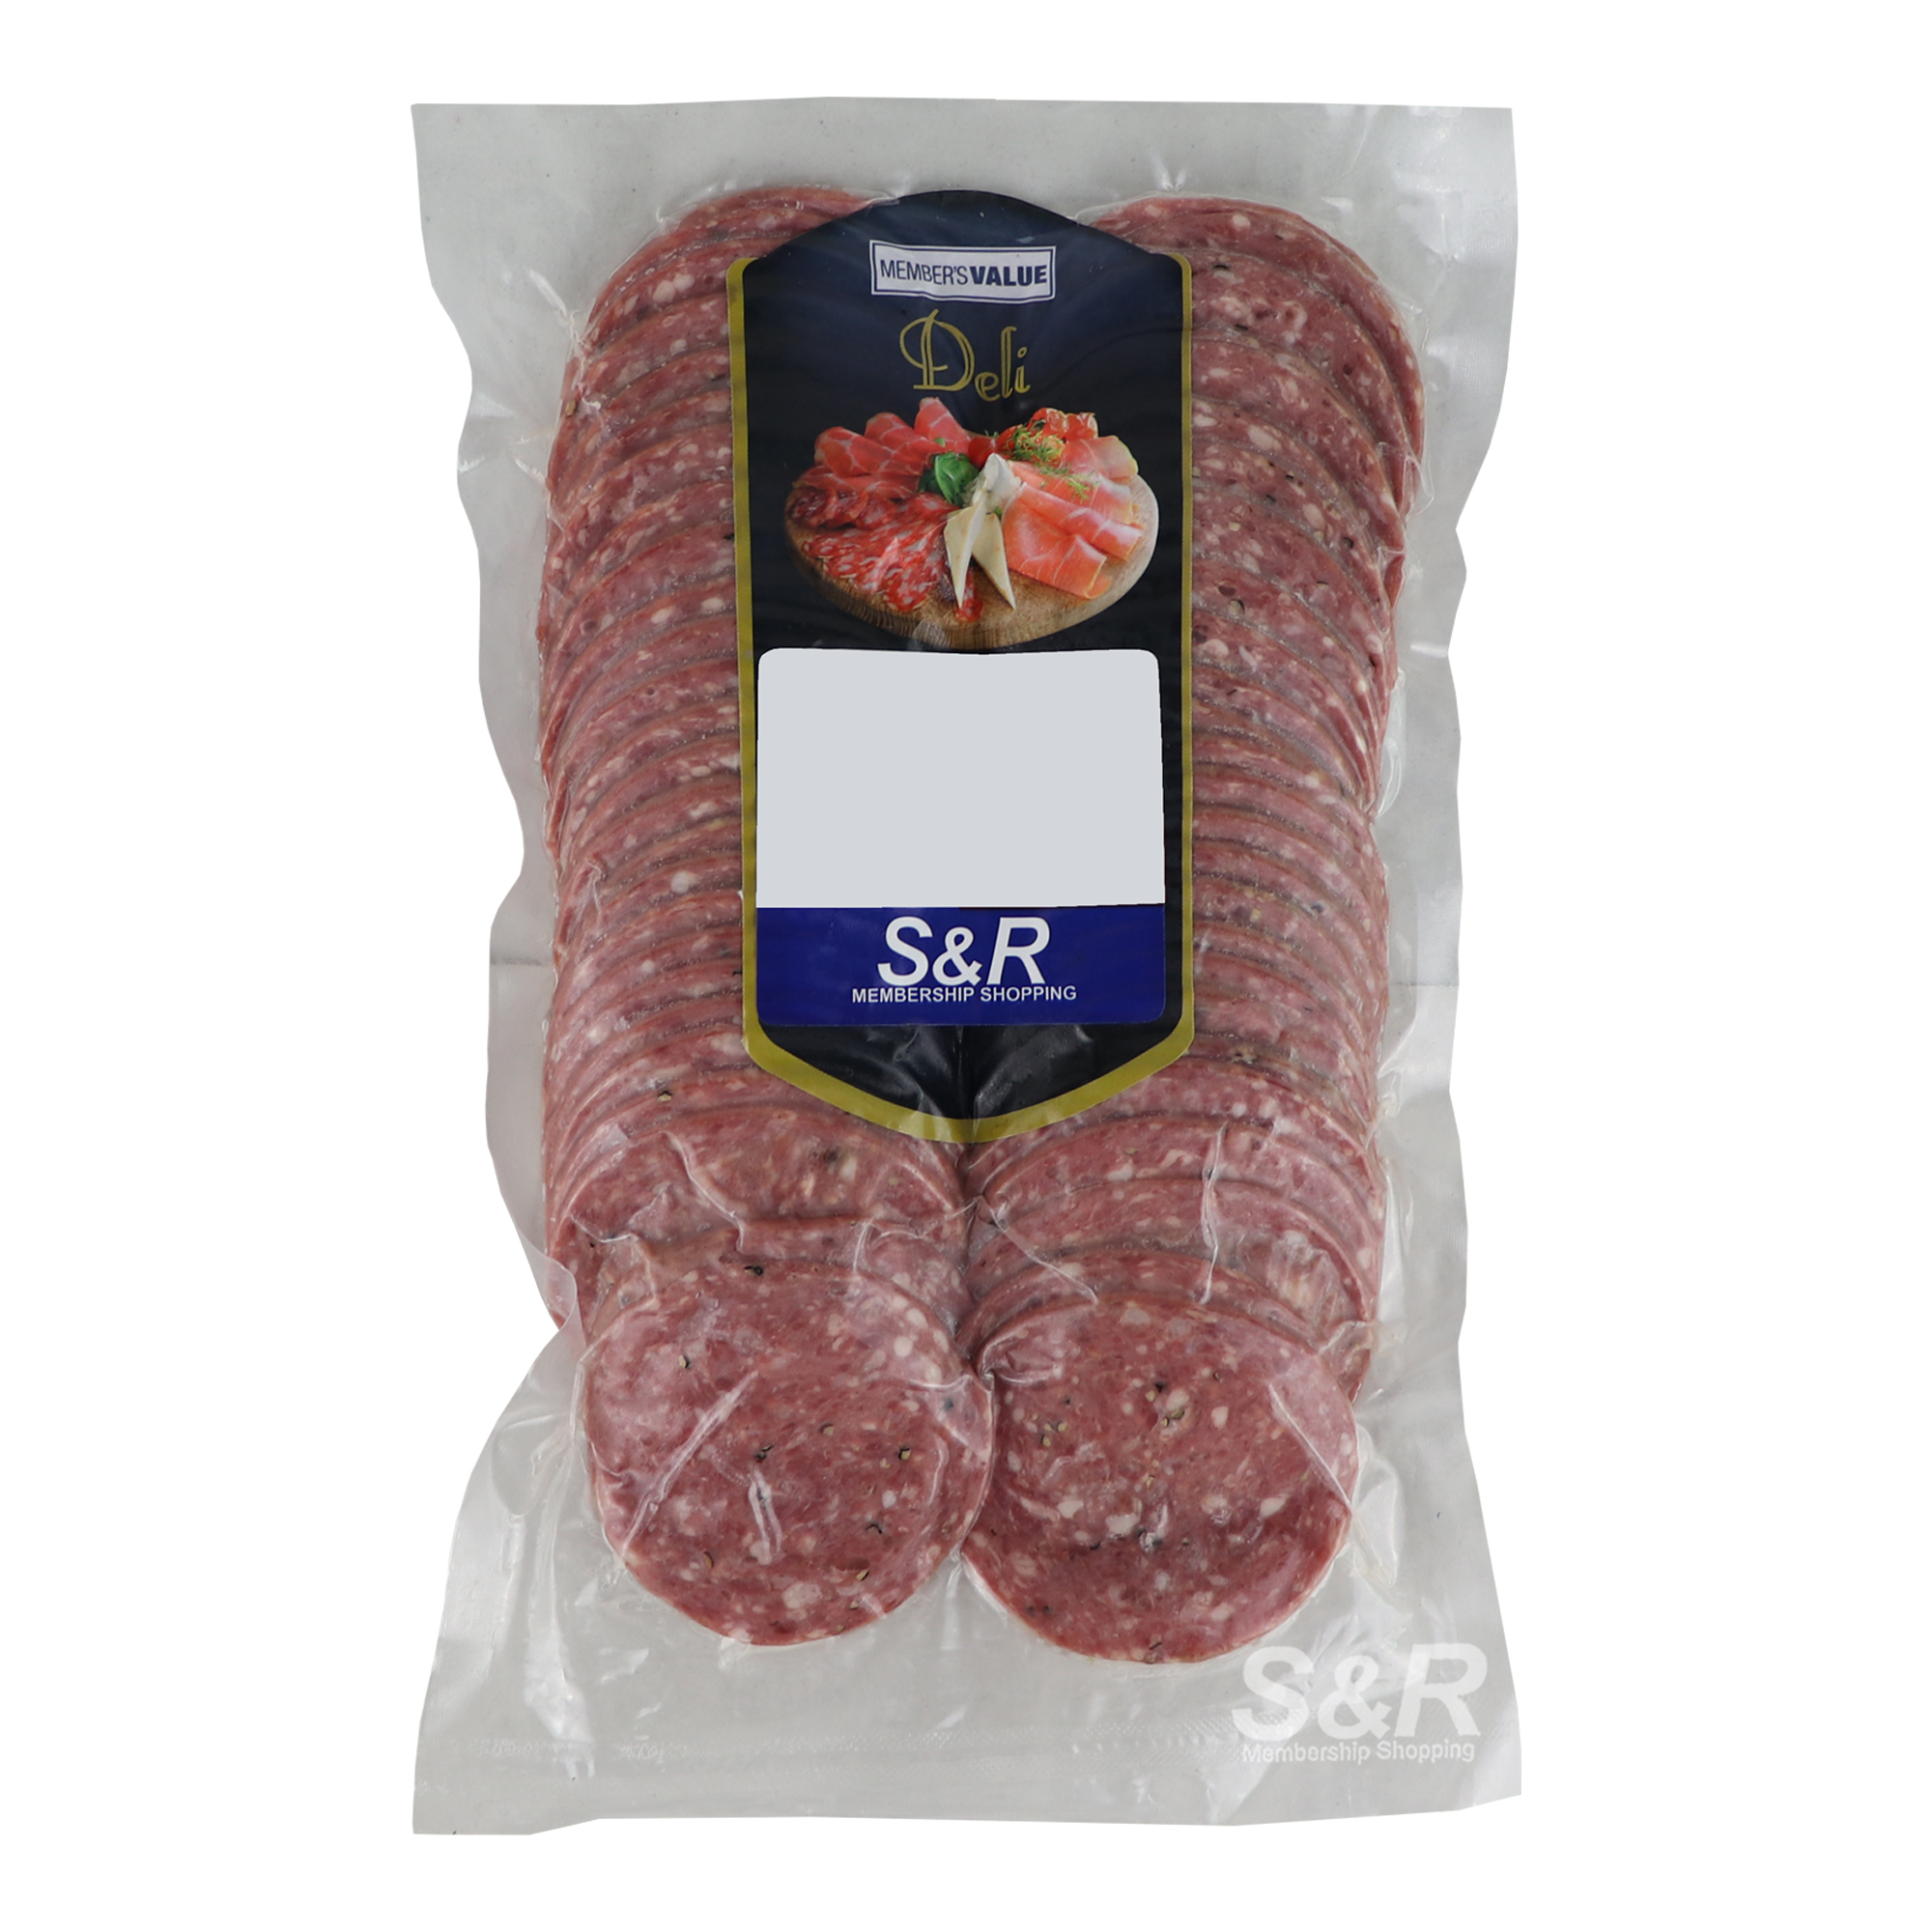 Member's Value Beef Salami approx. 1.5kg